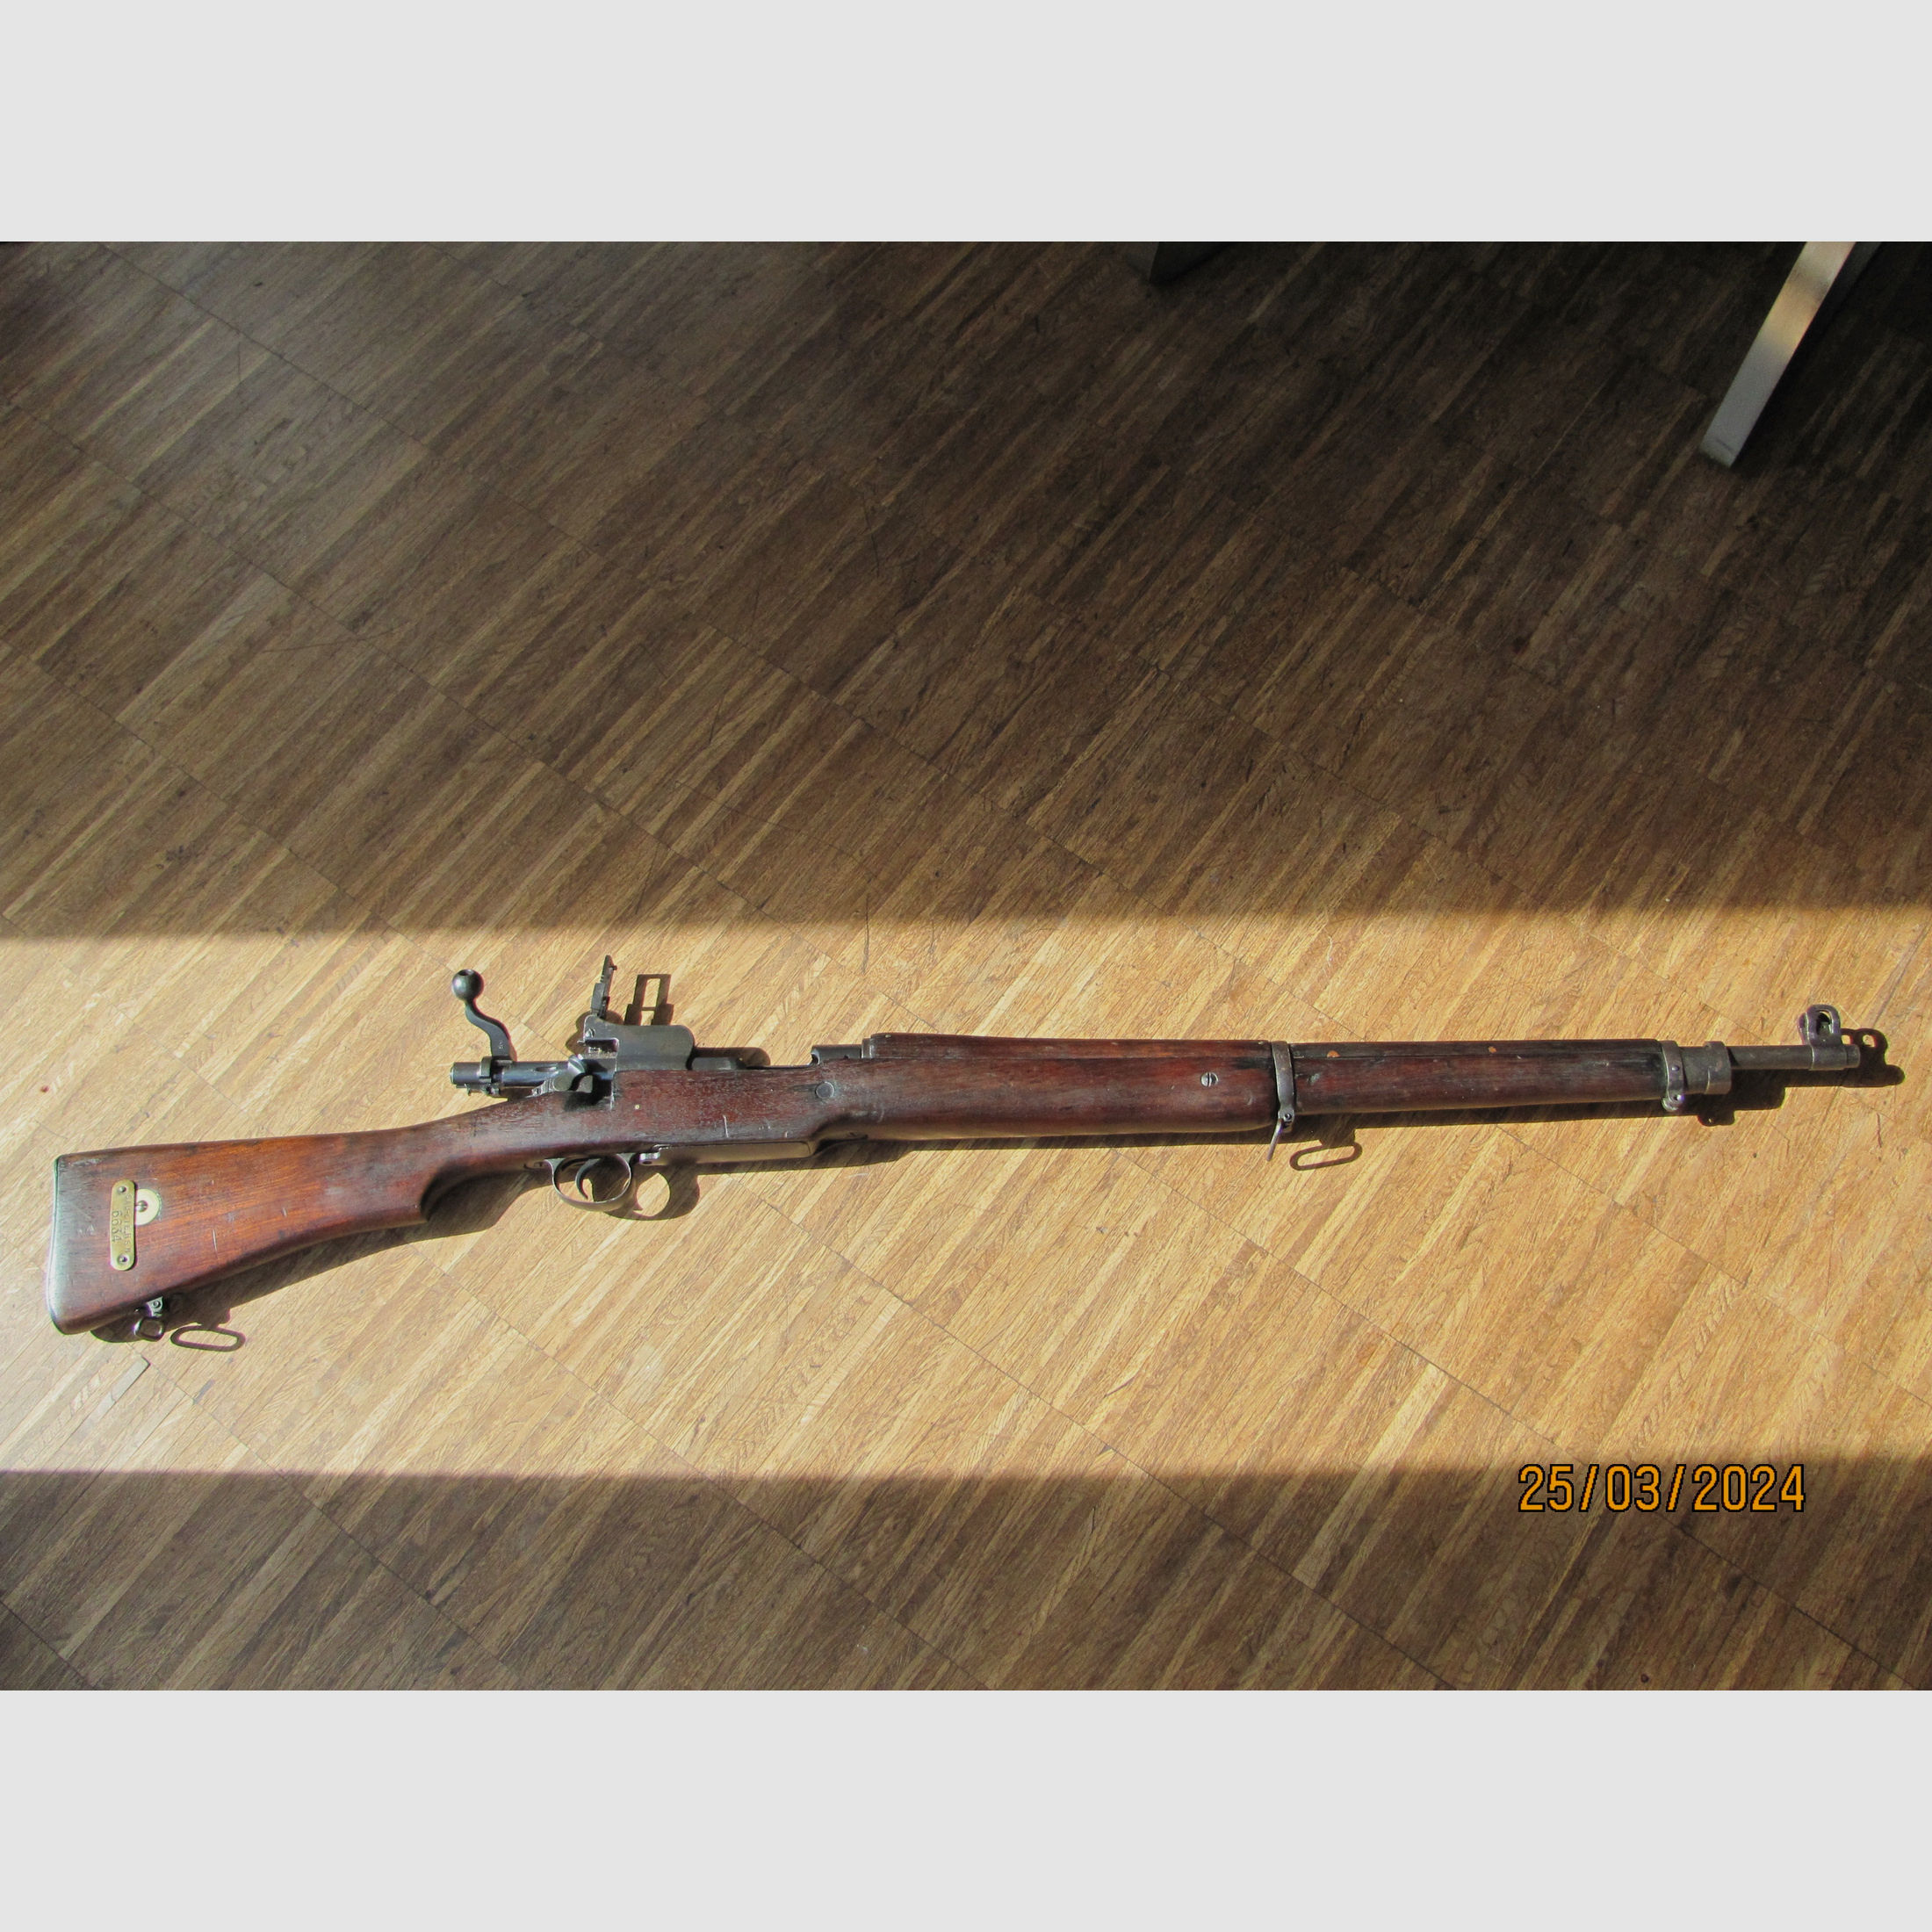 Seltene Enfield P14 Mark 1*  Remington .303 british -- gestempelt RE * ProdNr 9378x --  guter Gesamtzustand -- 975,- VHB